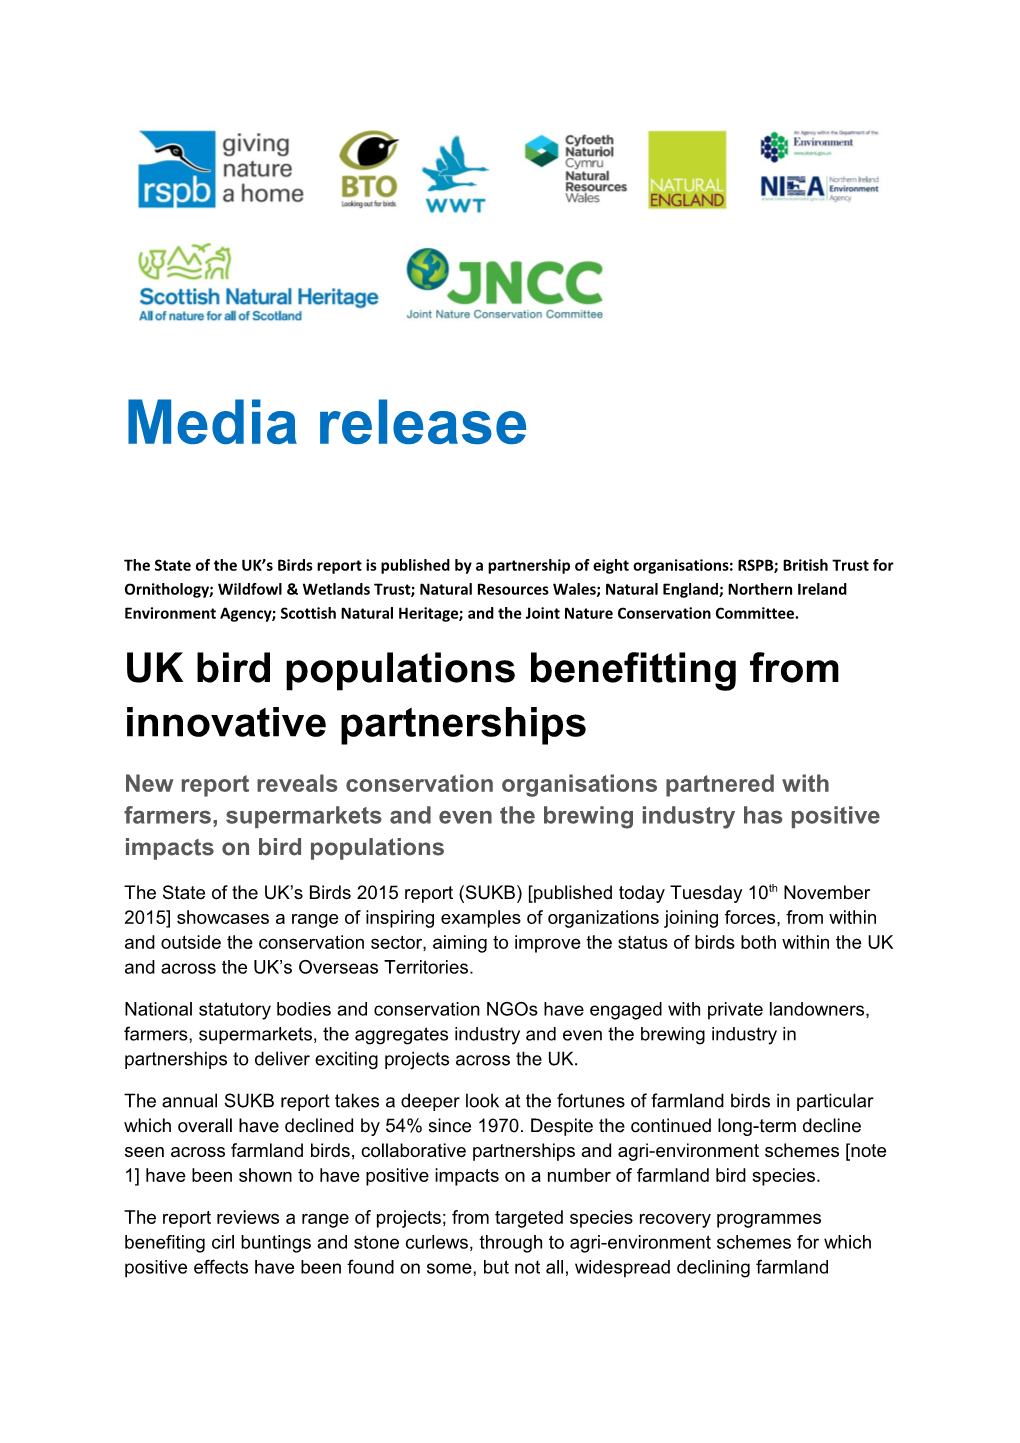 UK Bird Populations Benefitting from Innovative Partnerships